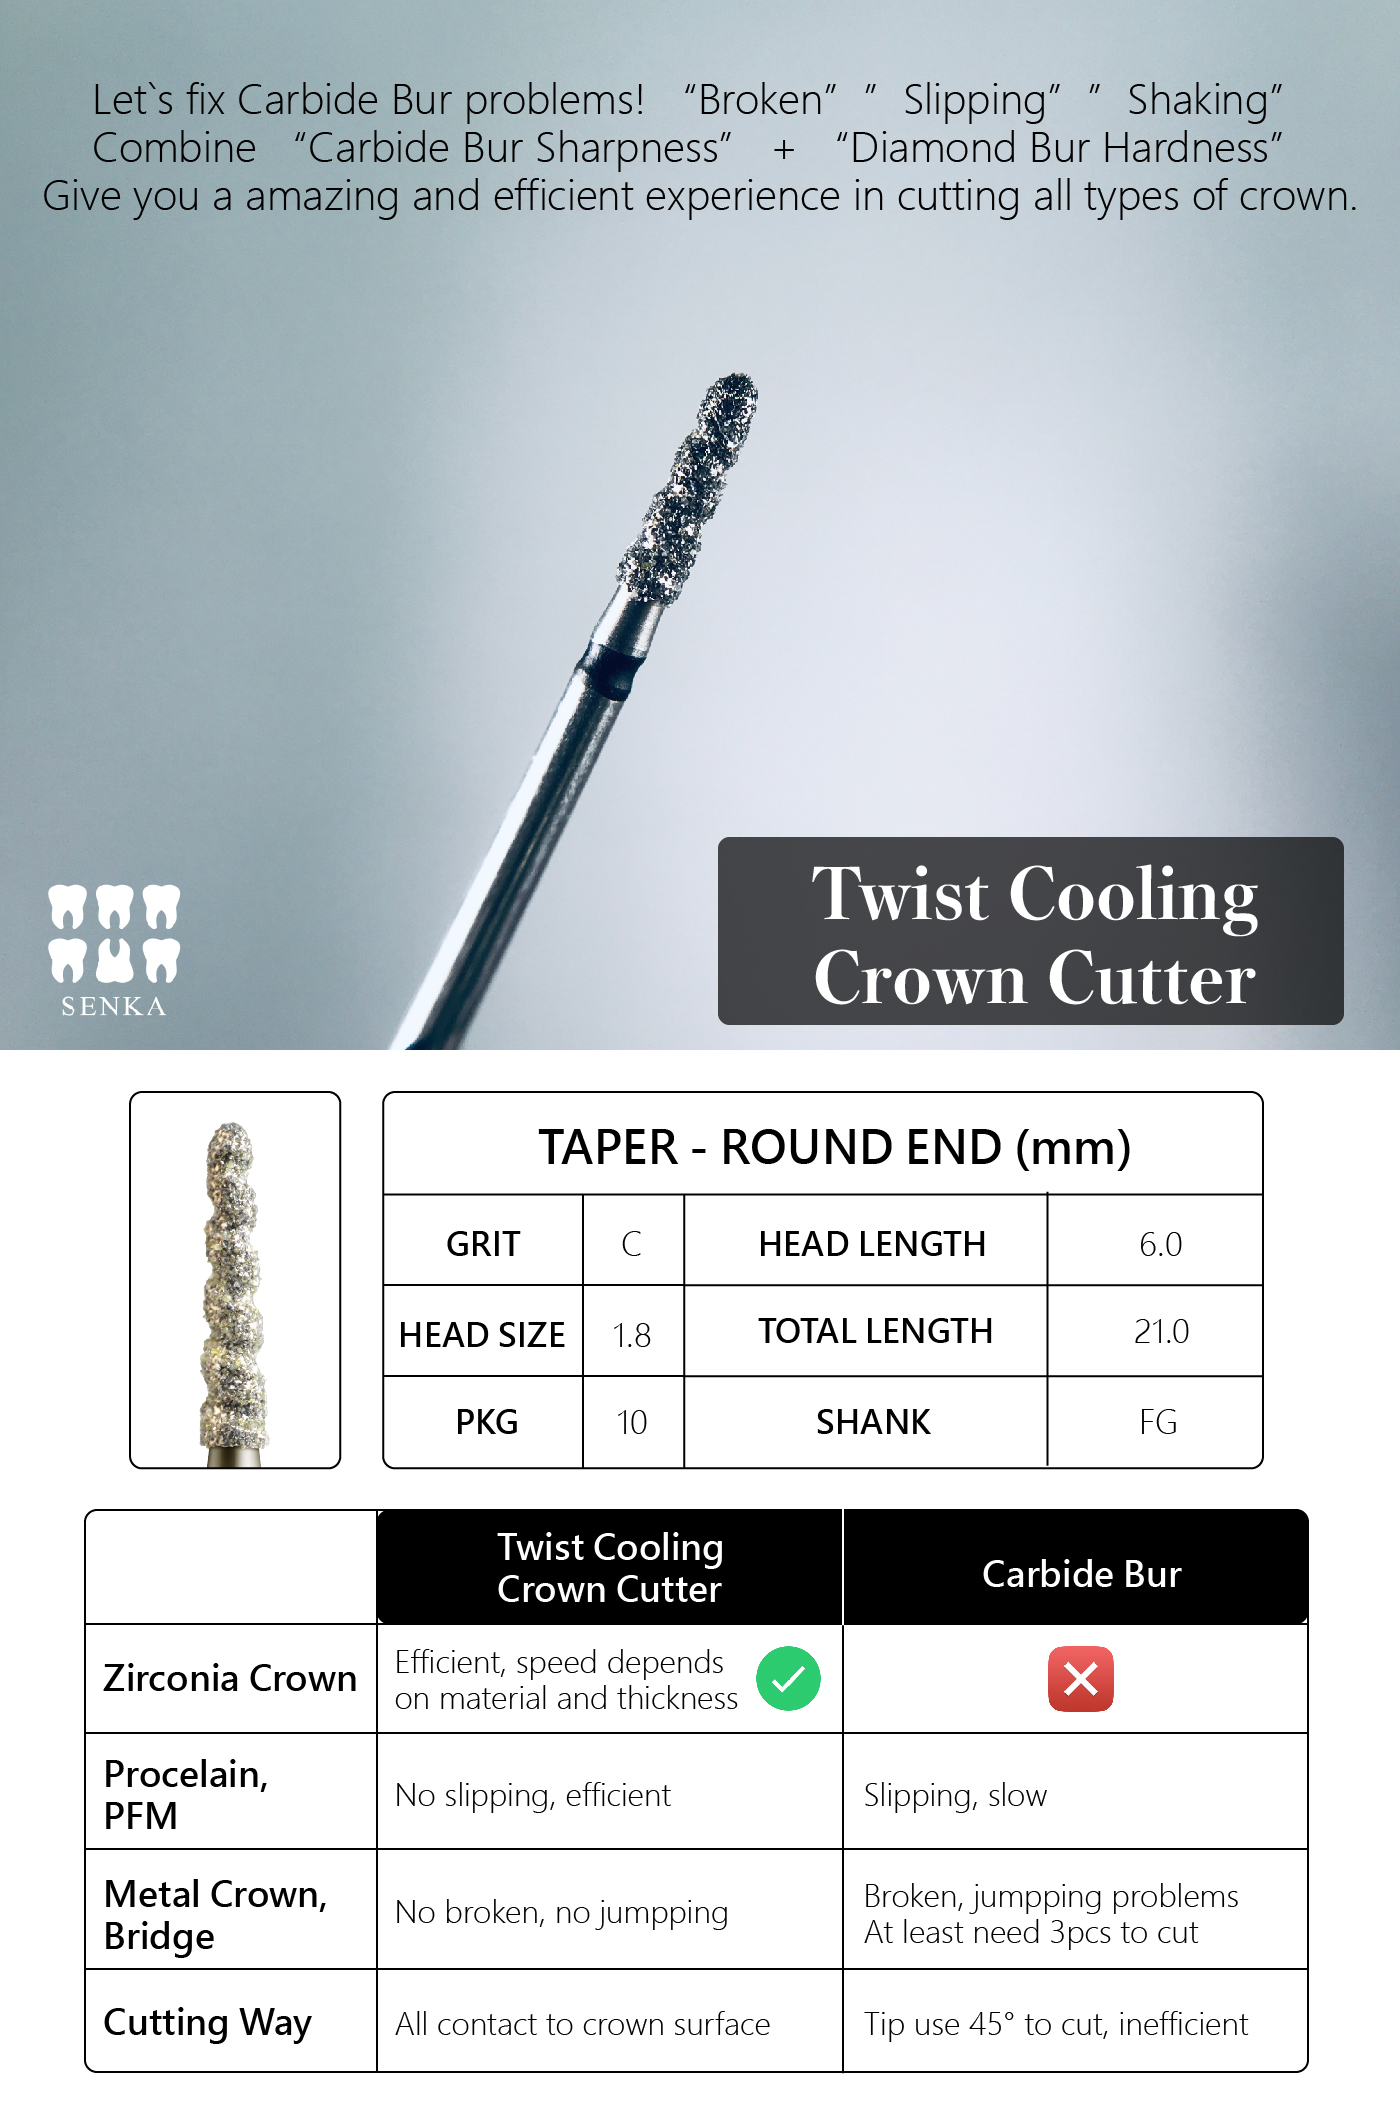 Twist Cooling Crown Cutter content_工作區域 1.jpg